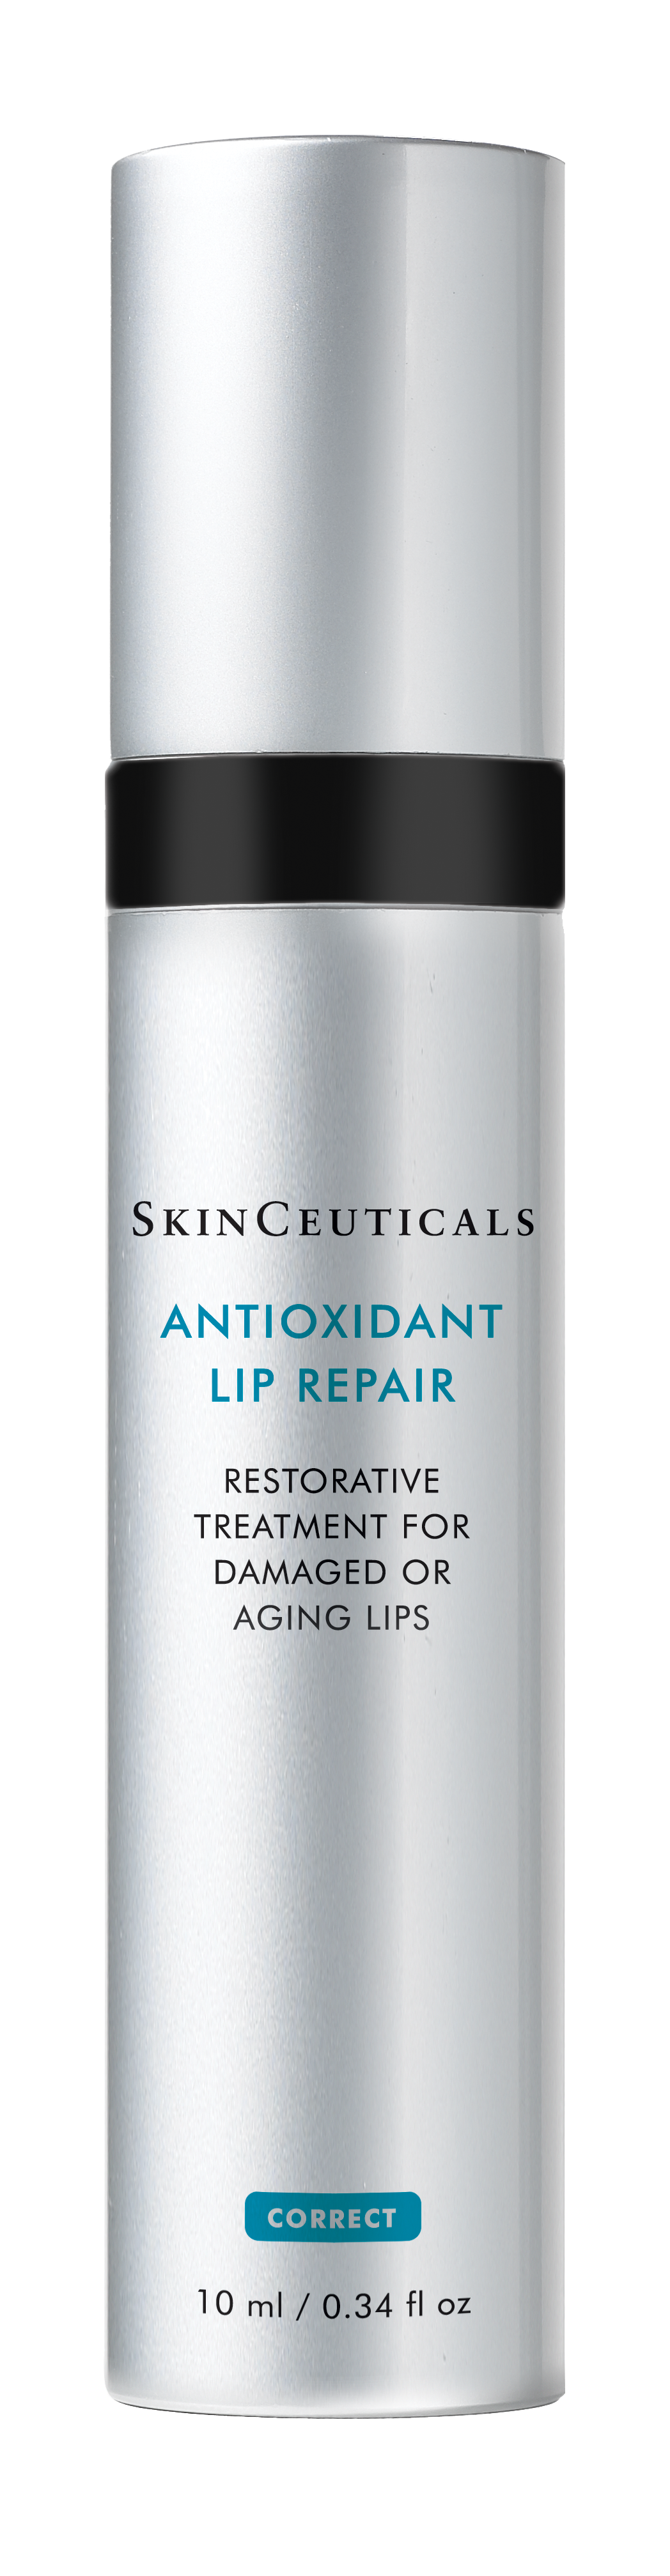 Antioxidant Lip Repair - RSVP Beauty Clinic